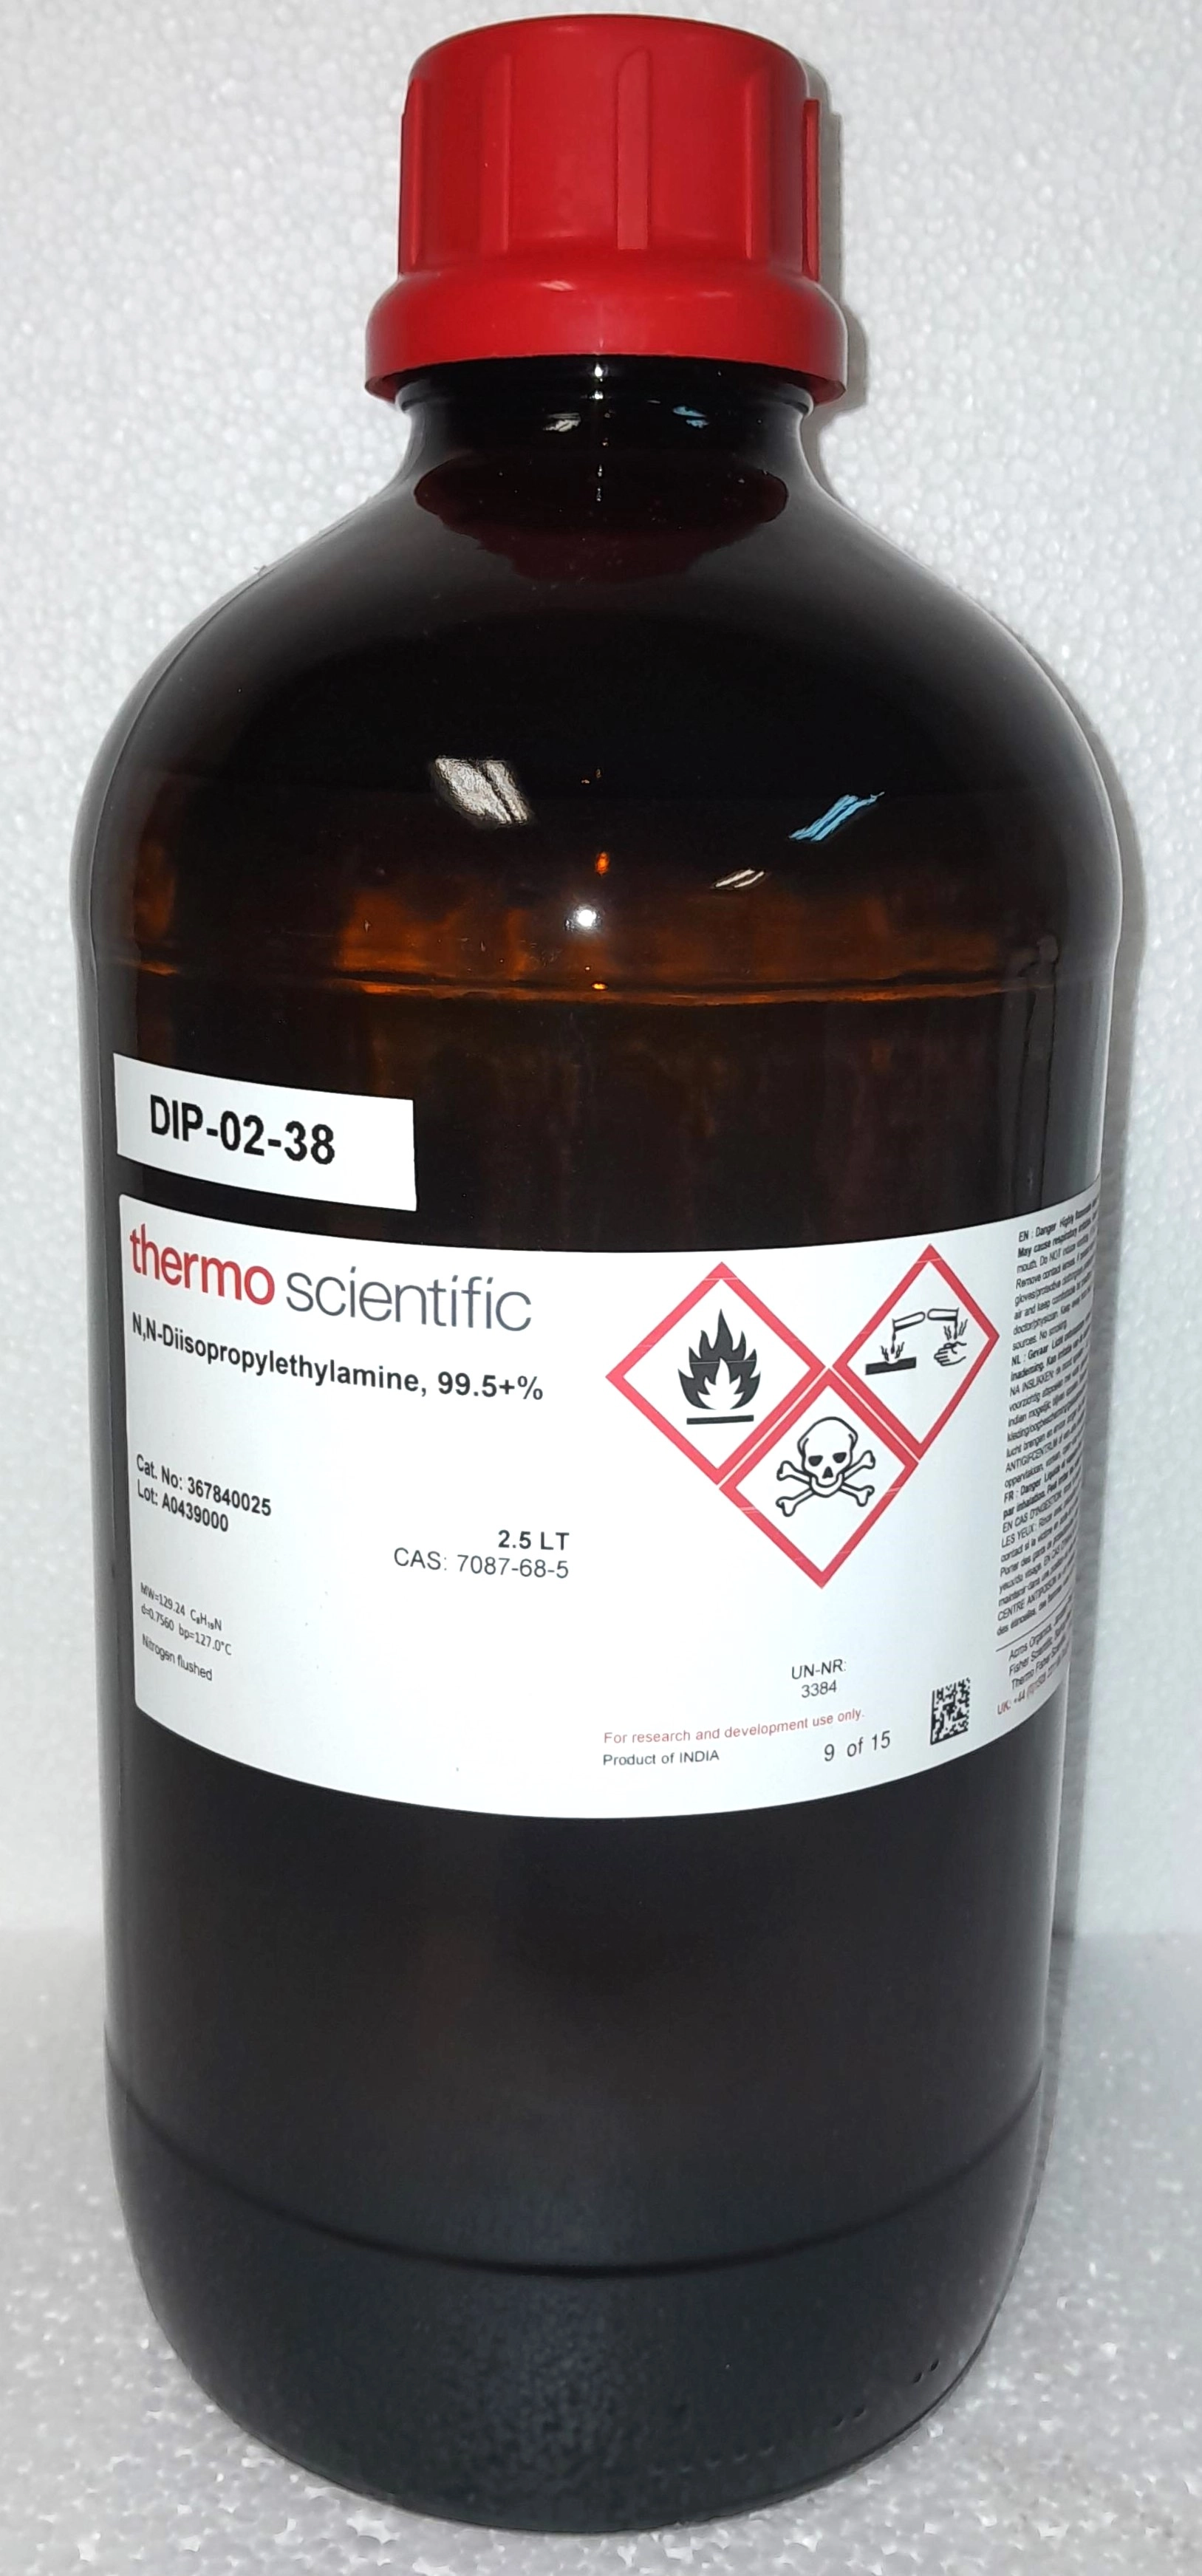 Thermo Scientific 367840025 N,N-Diisopropylethylamine - 99.5+% (2.5L)